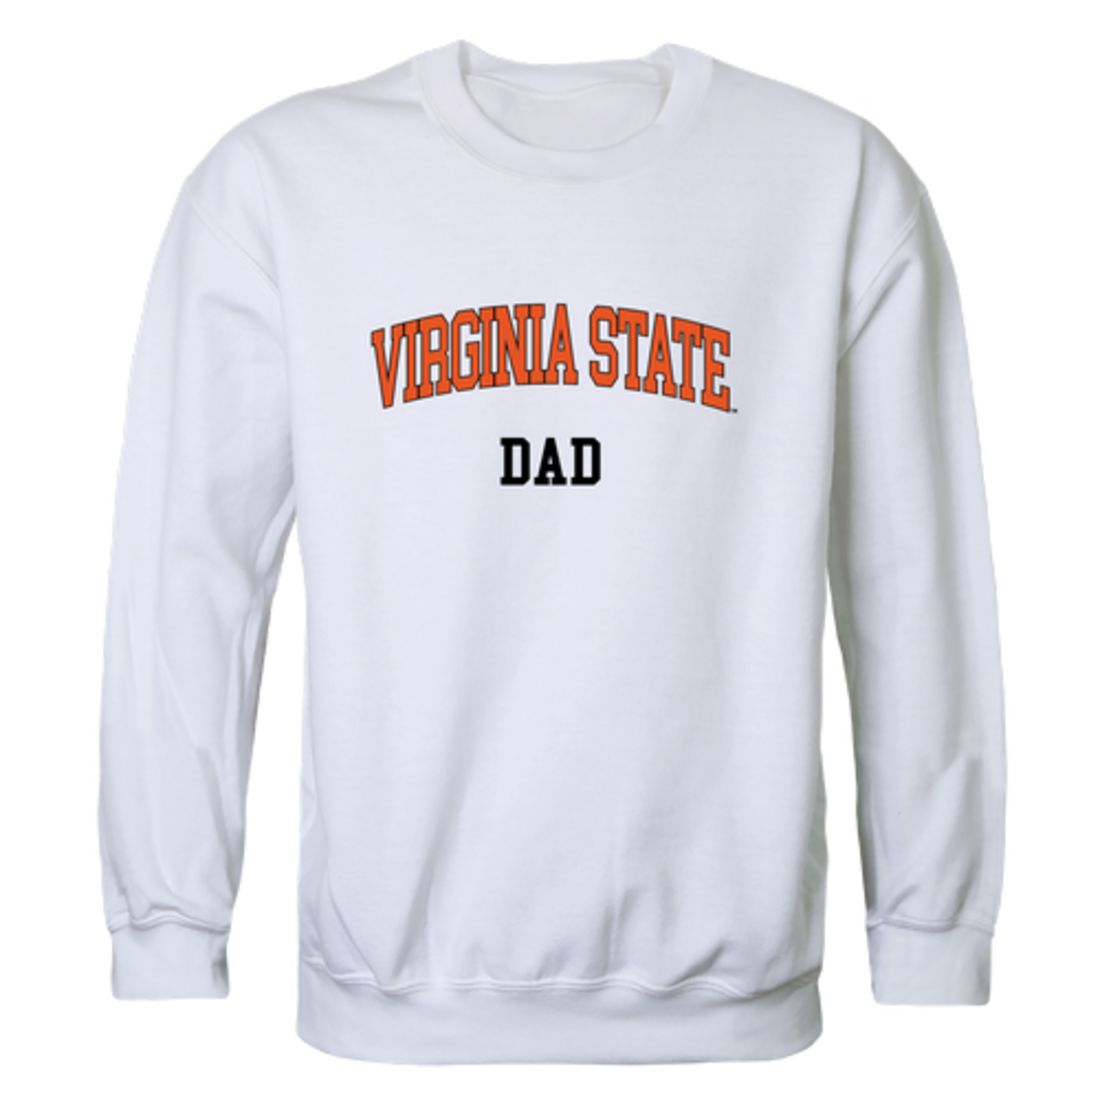 Virginia State University Trojans Dad Fleece Crewneck Pullover Sweatshirt